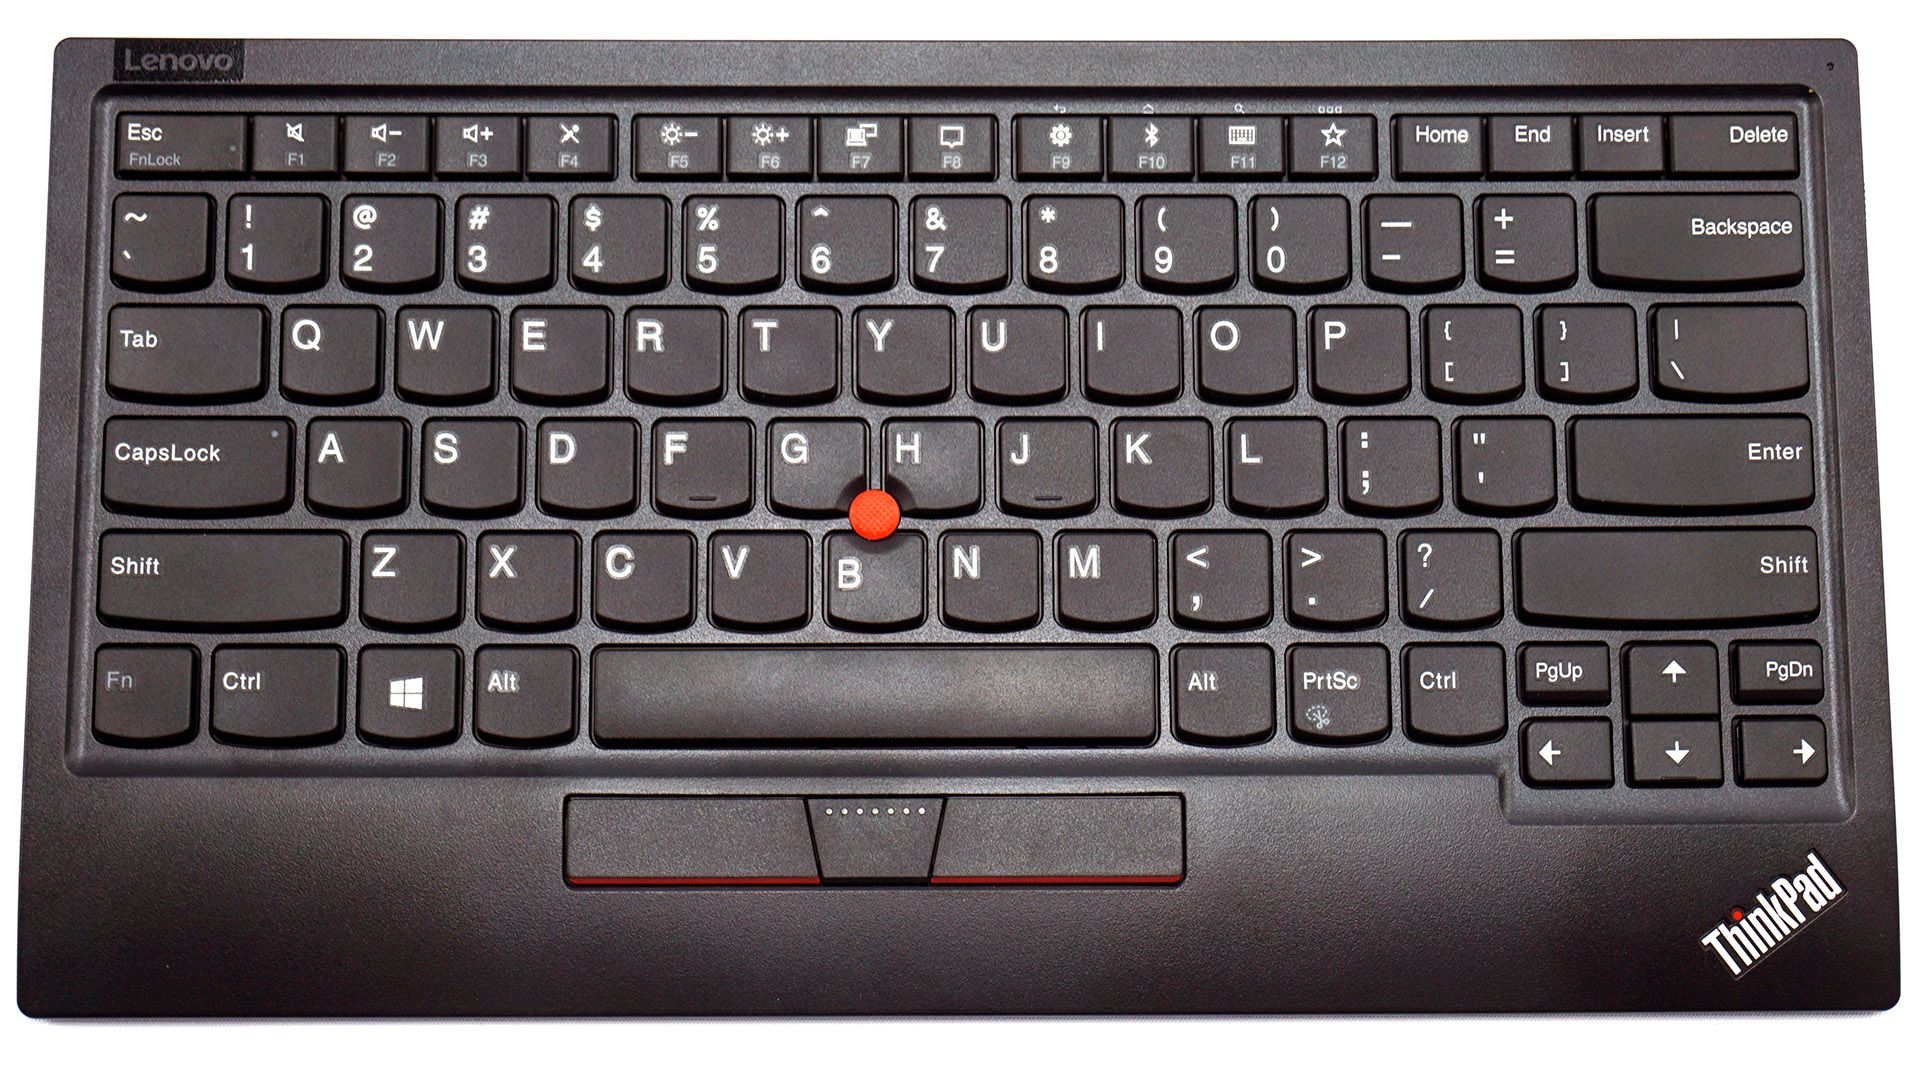 ThinkPad Keyboard layout